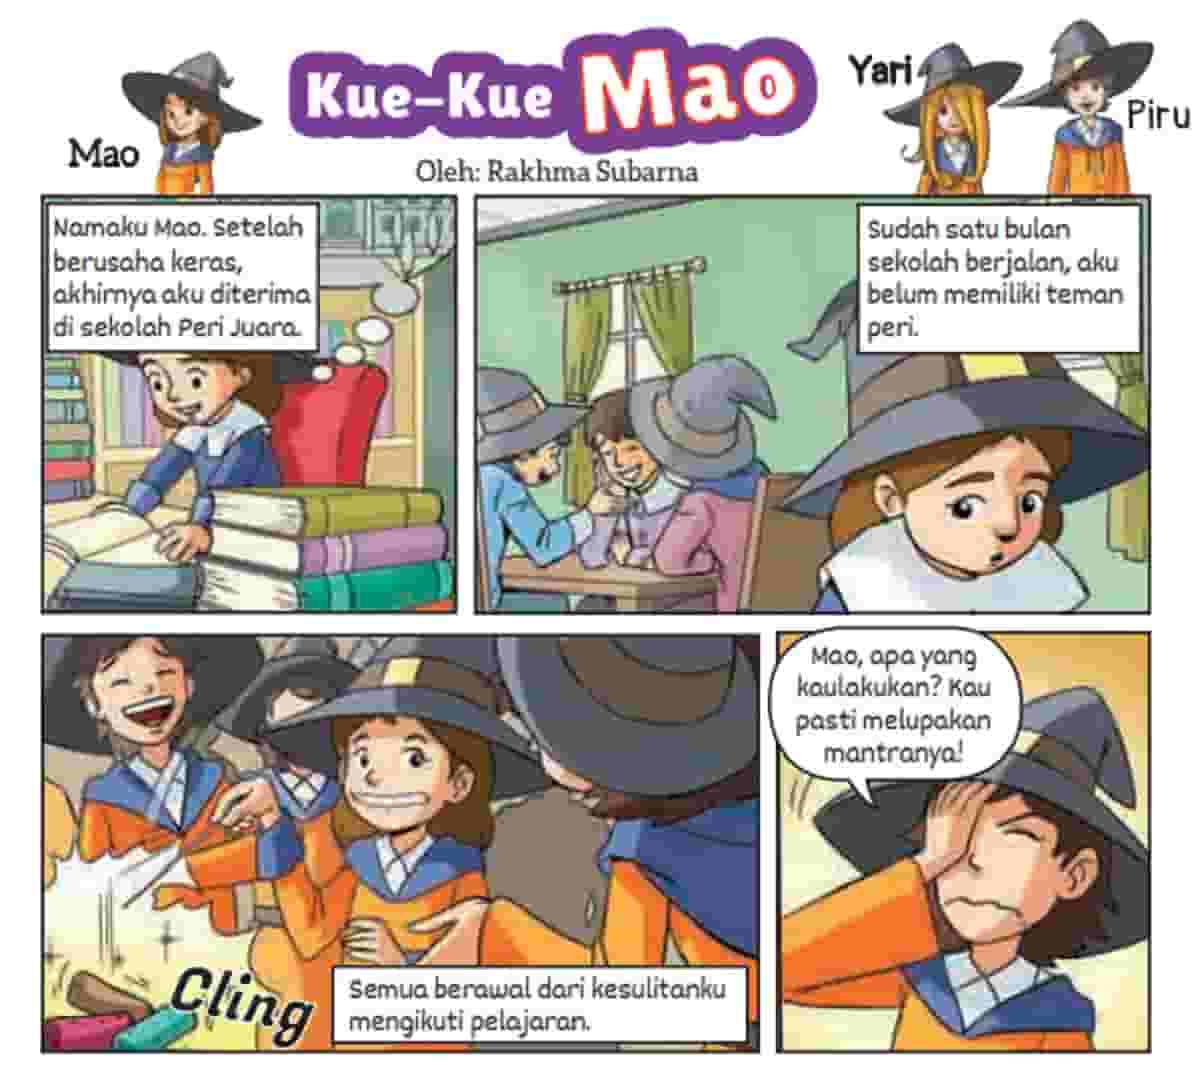 Mengapa Mao mendapatkan perlakuan buruk dari Yari dan teman-temannya cerita komik Kue-kue Mao Bahasa Indonesia kelas 7 halaman 57